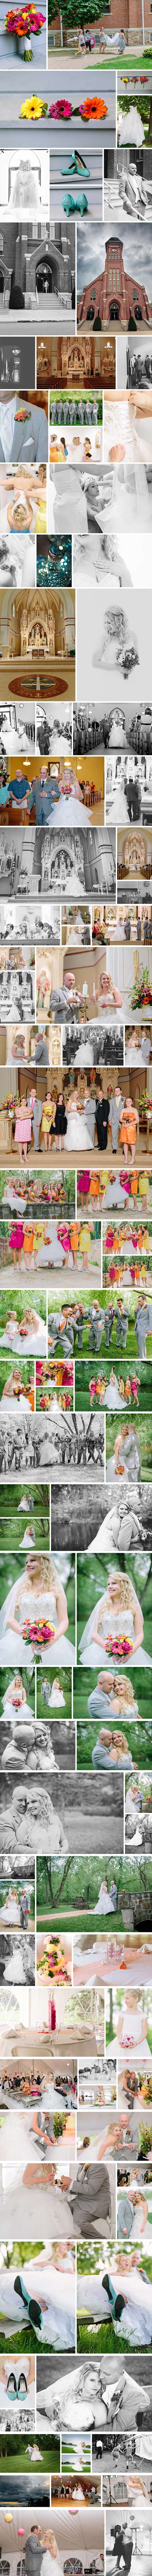 June Stevens Point Church Wedding Photo Bright colorful wedding inspiration